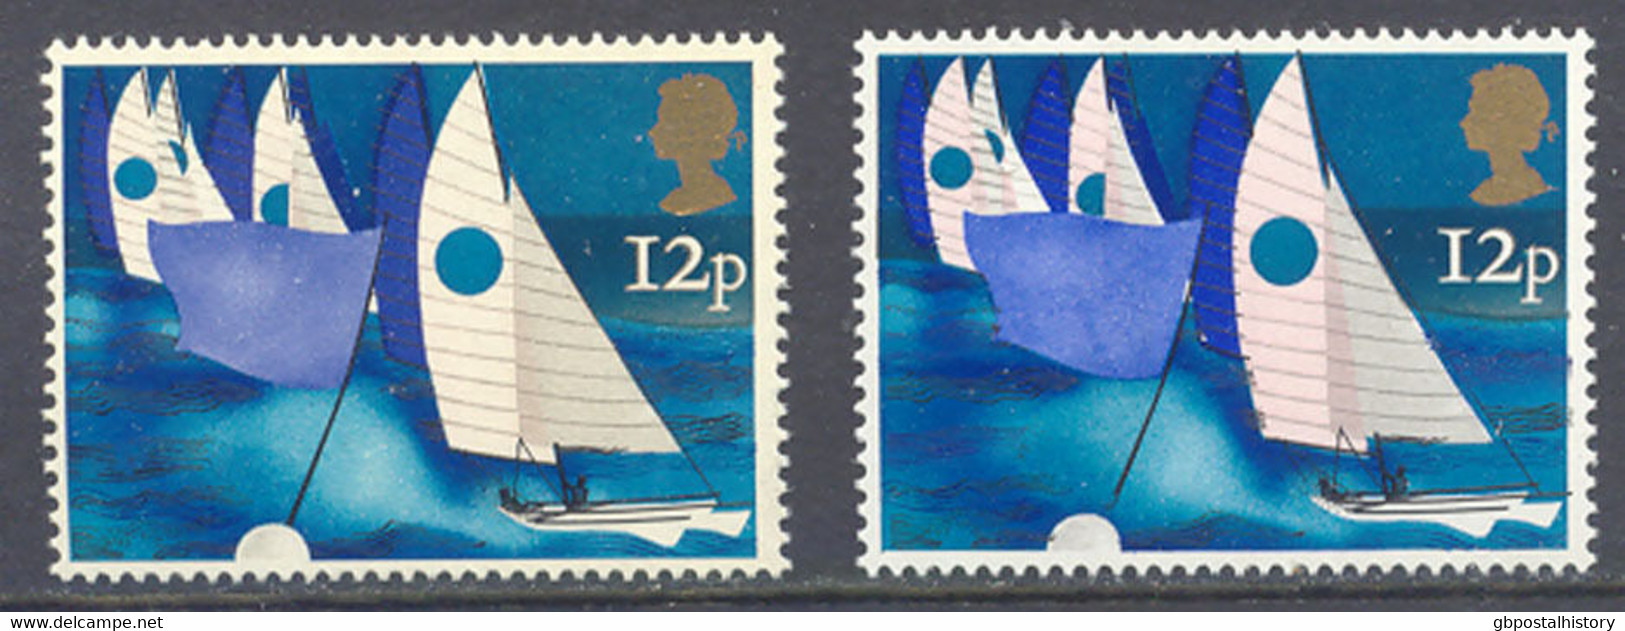 GB 1975 Sailing 12 P U/M ERROR/VARIETY: ROSE COLOUR + PHOSPHOR MISSING - Errors, Freaks & Oddities (EFOs